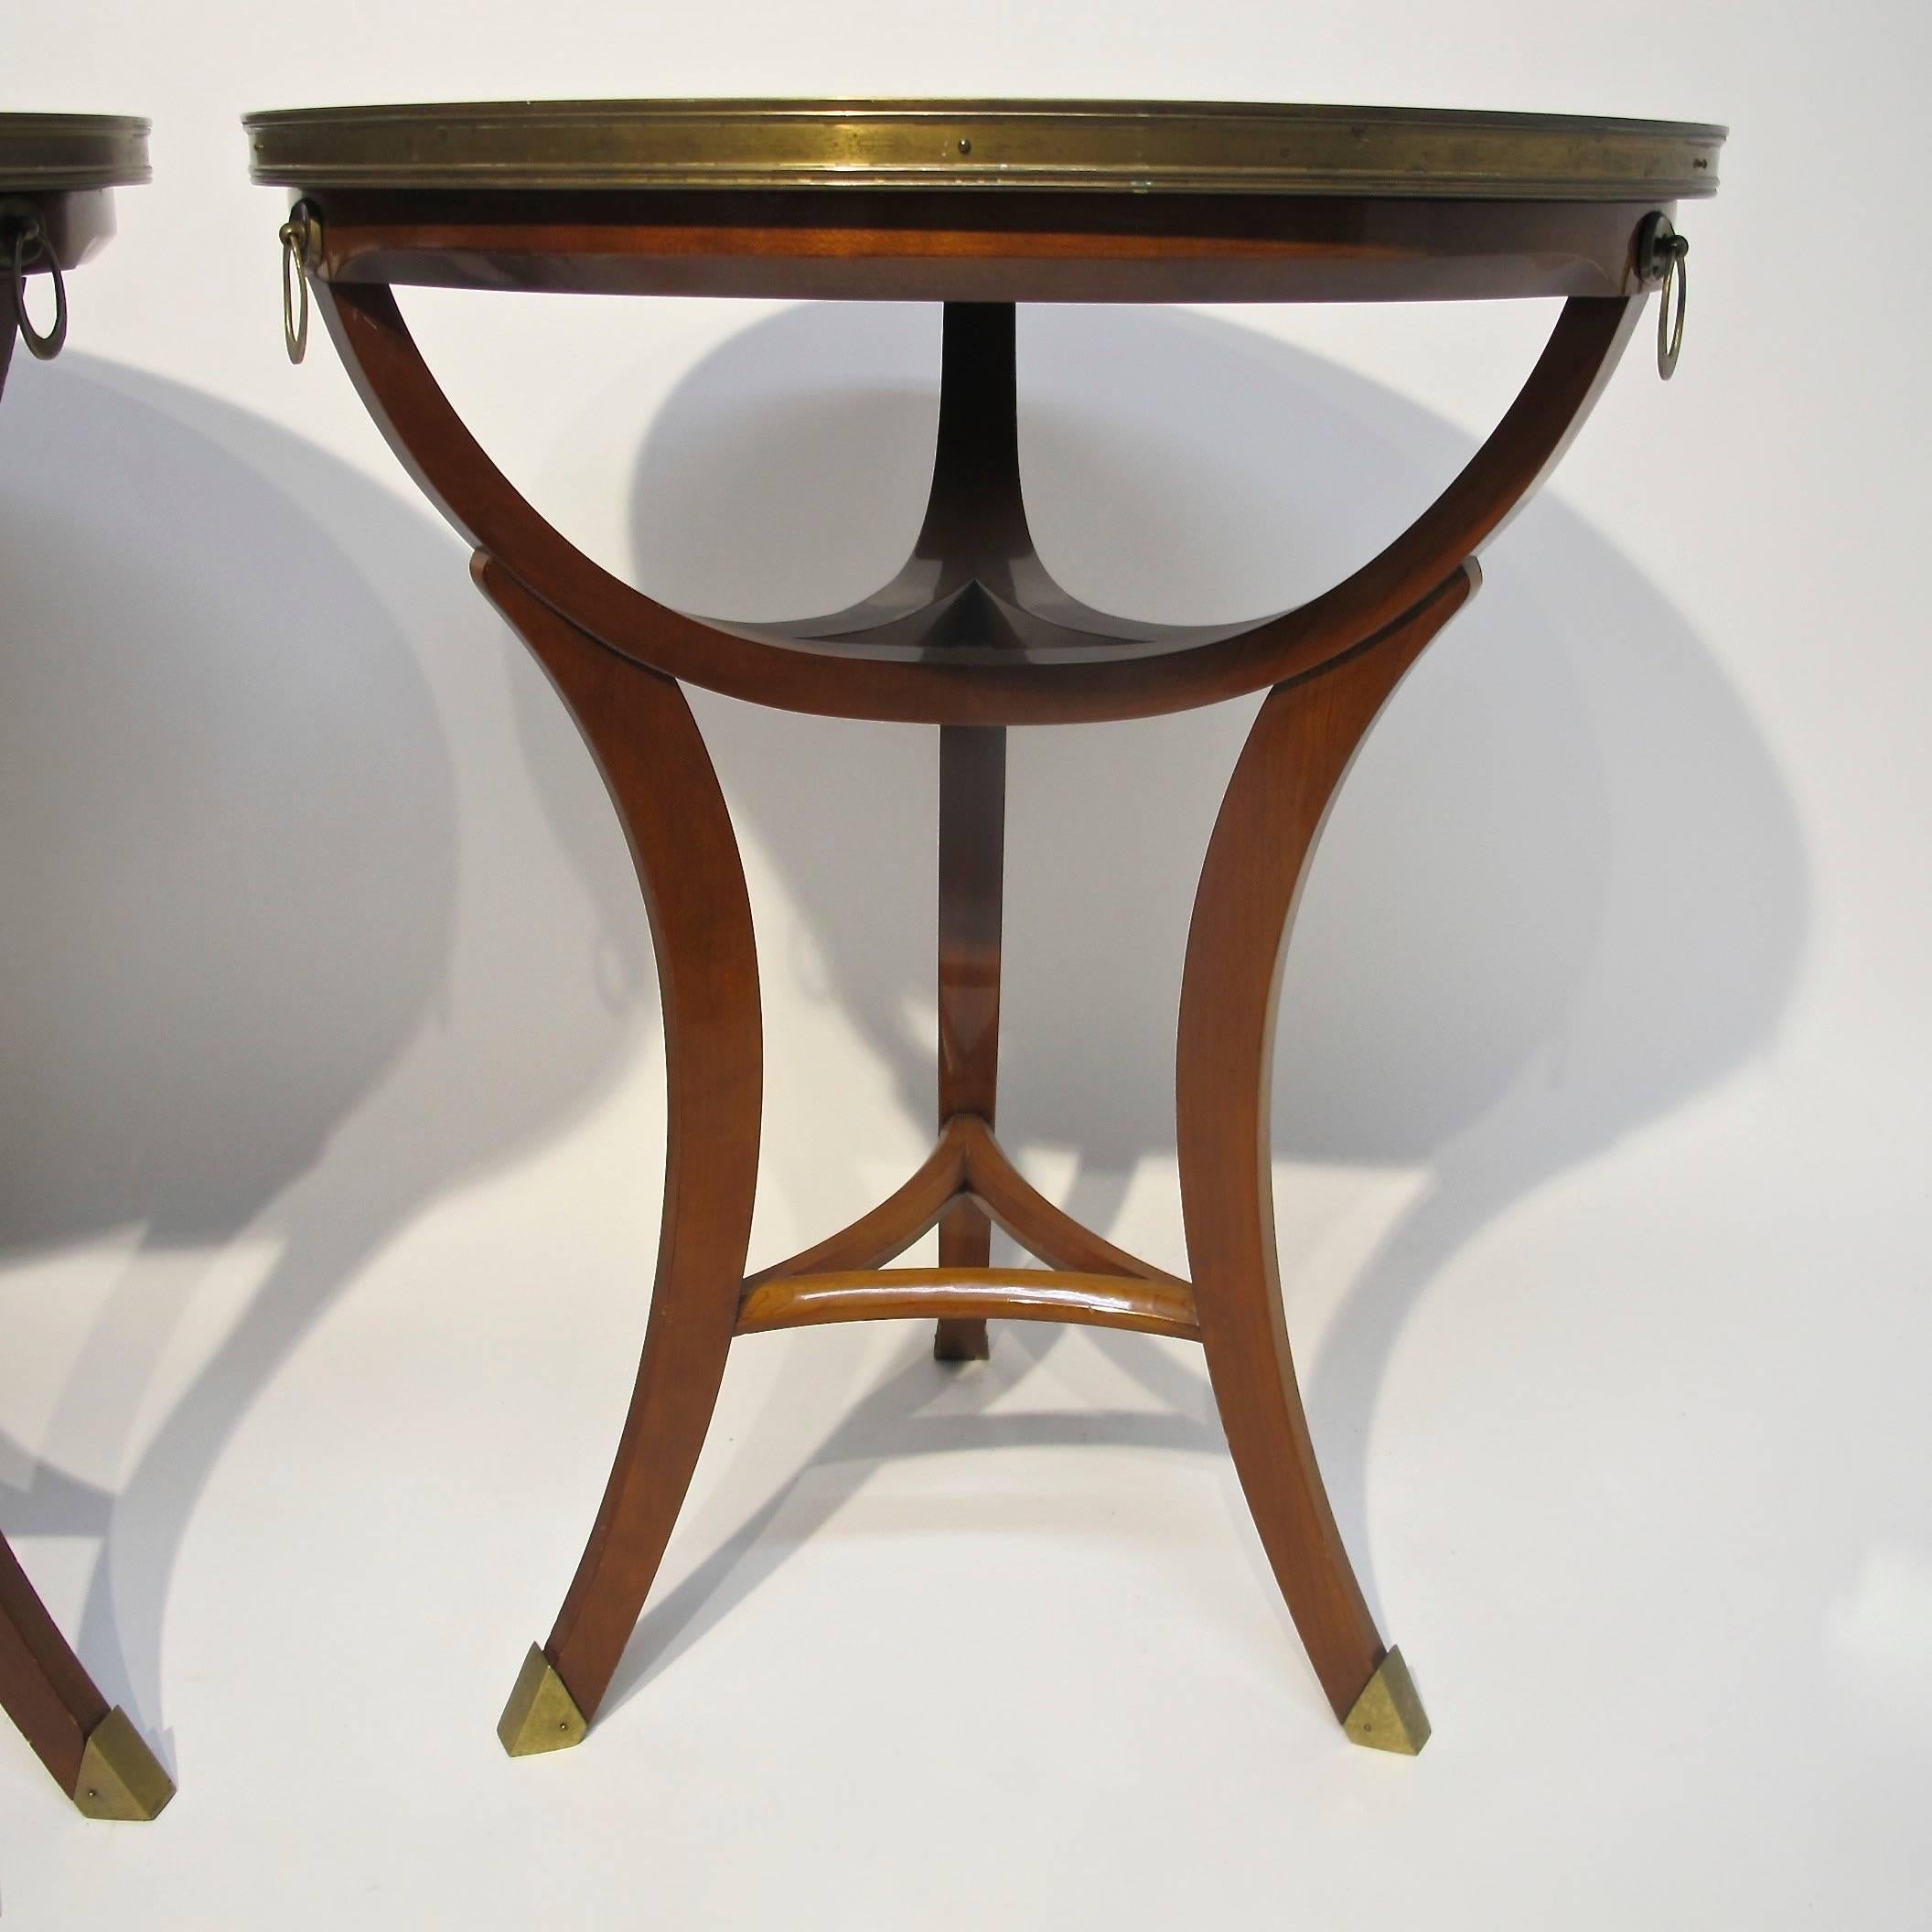 American Pair of Mid-Century Modern End Tables by John Widdicomb